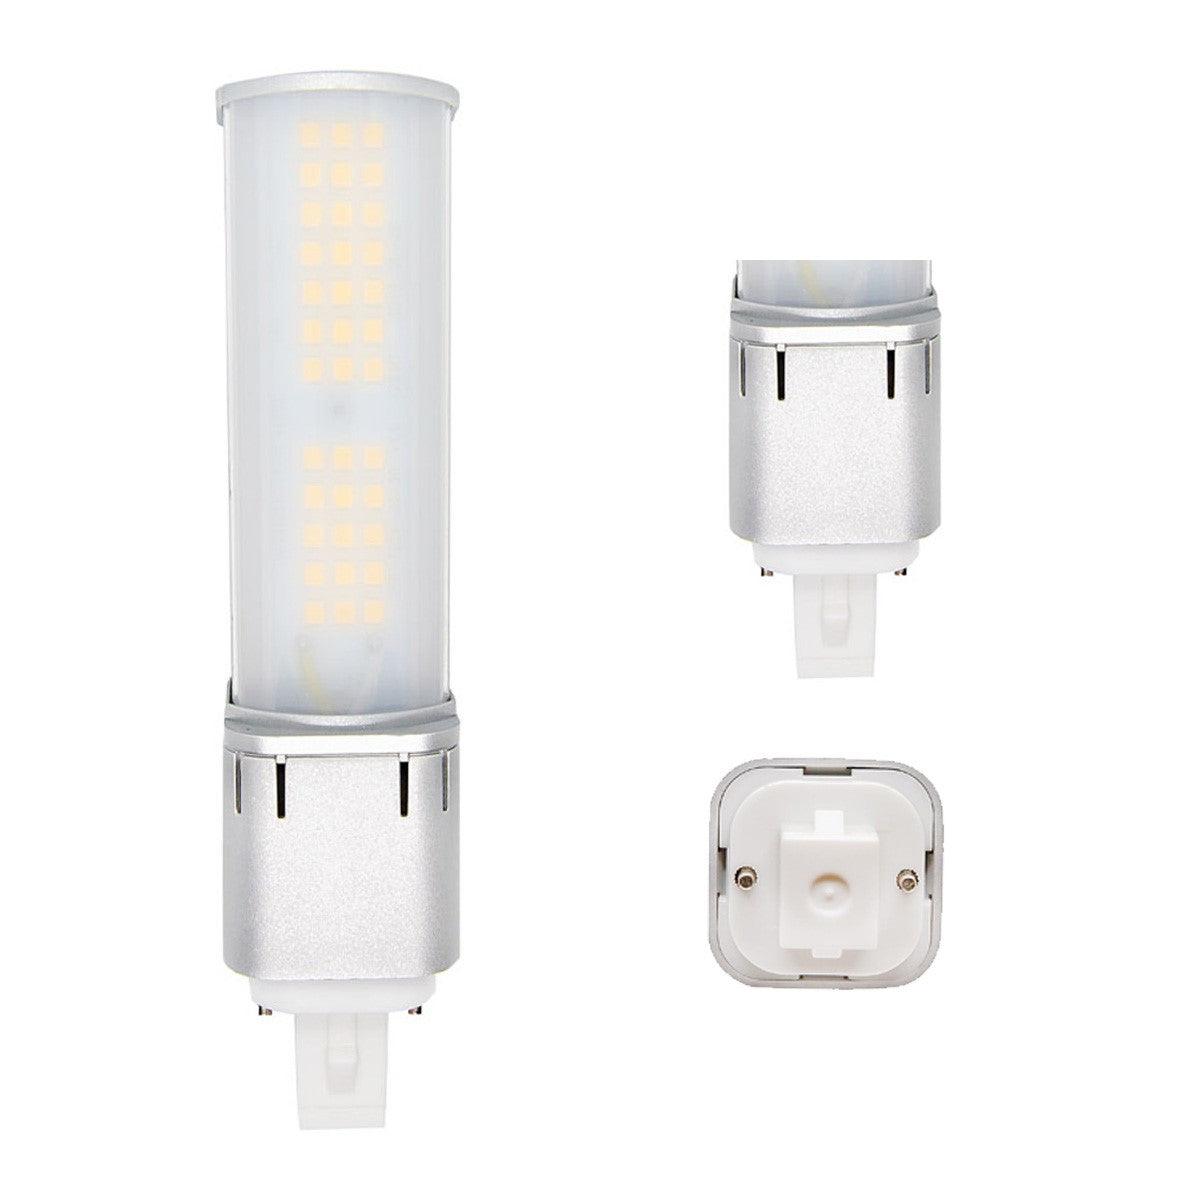 2 pin PL LED Bulb, 7 Watt 840 Lumens, 2700K, Horizontal, Replaces 13W CFL, G23 Base, Direct Or Bypass - Bees Lighting